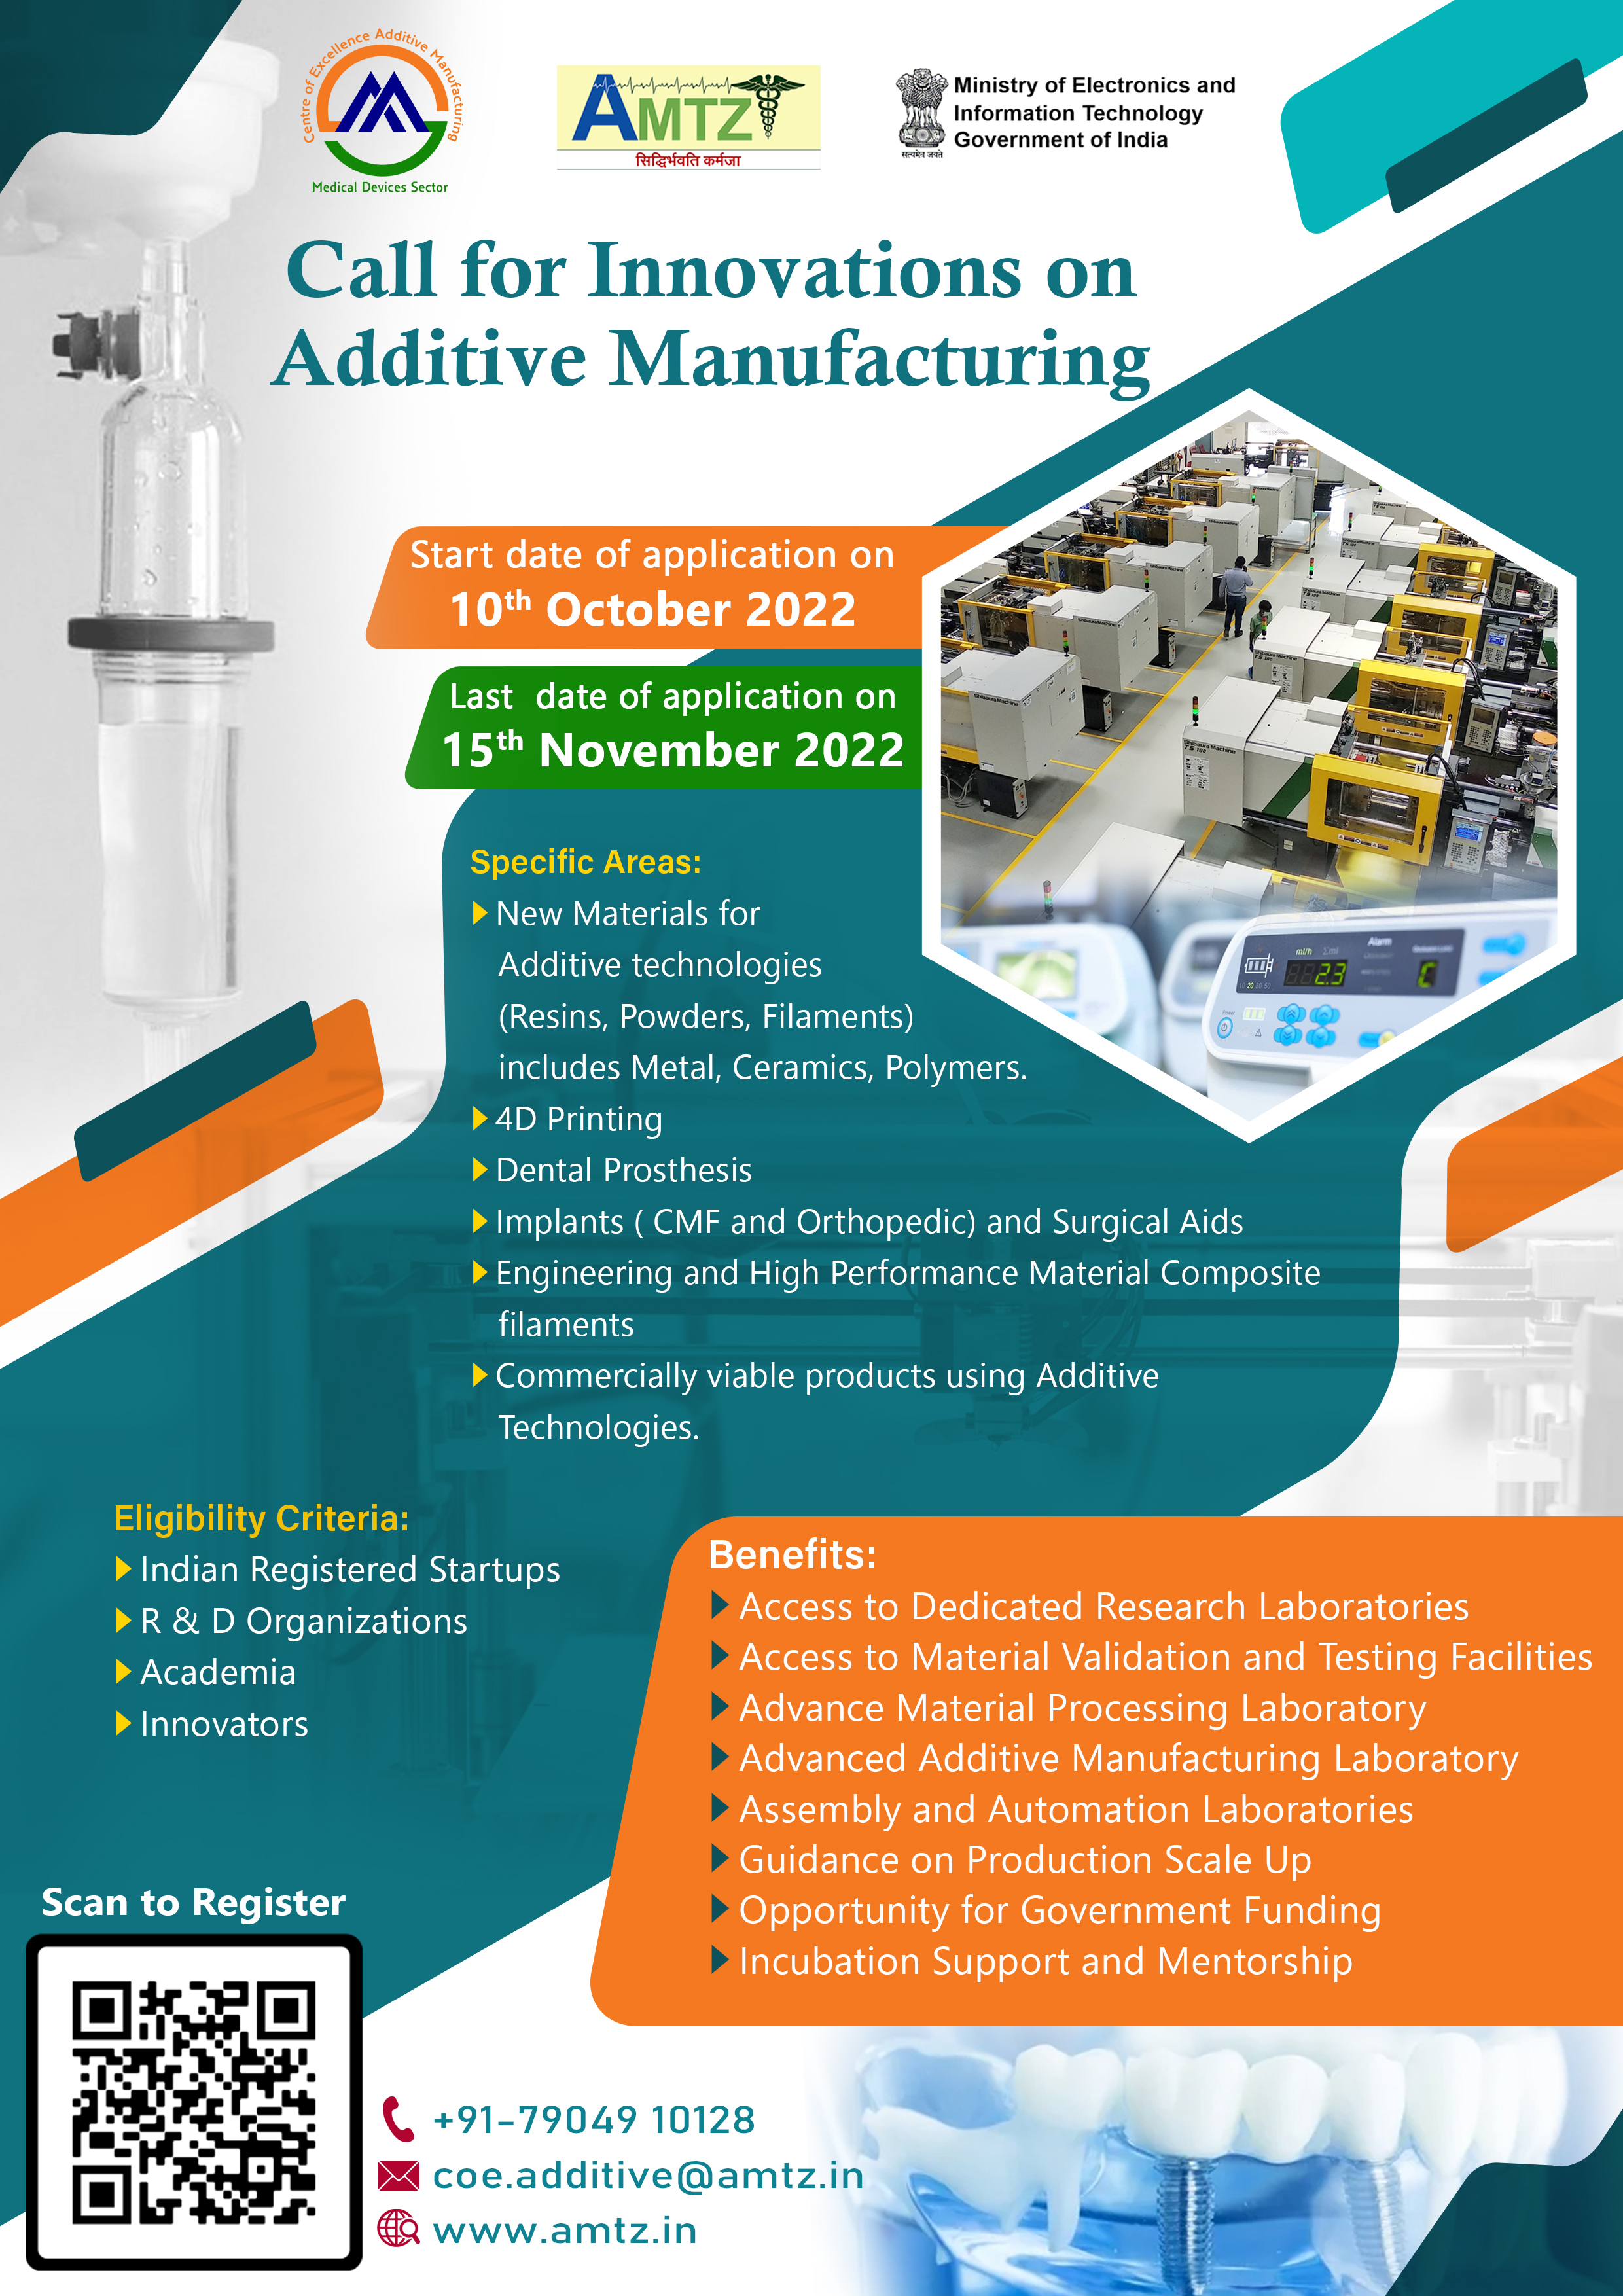 CoE-AM-MDS, Additive Manufacturing Innovation Call, AMTZ, MeitY GOI